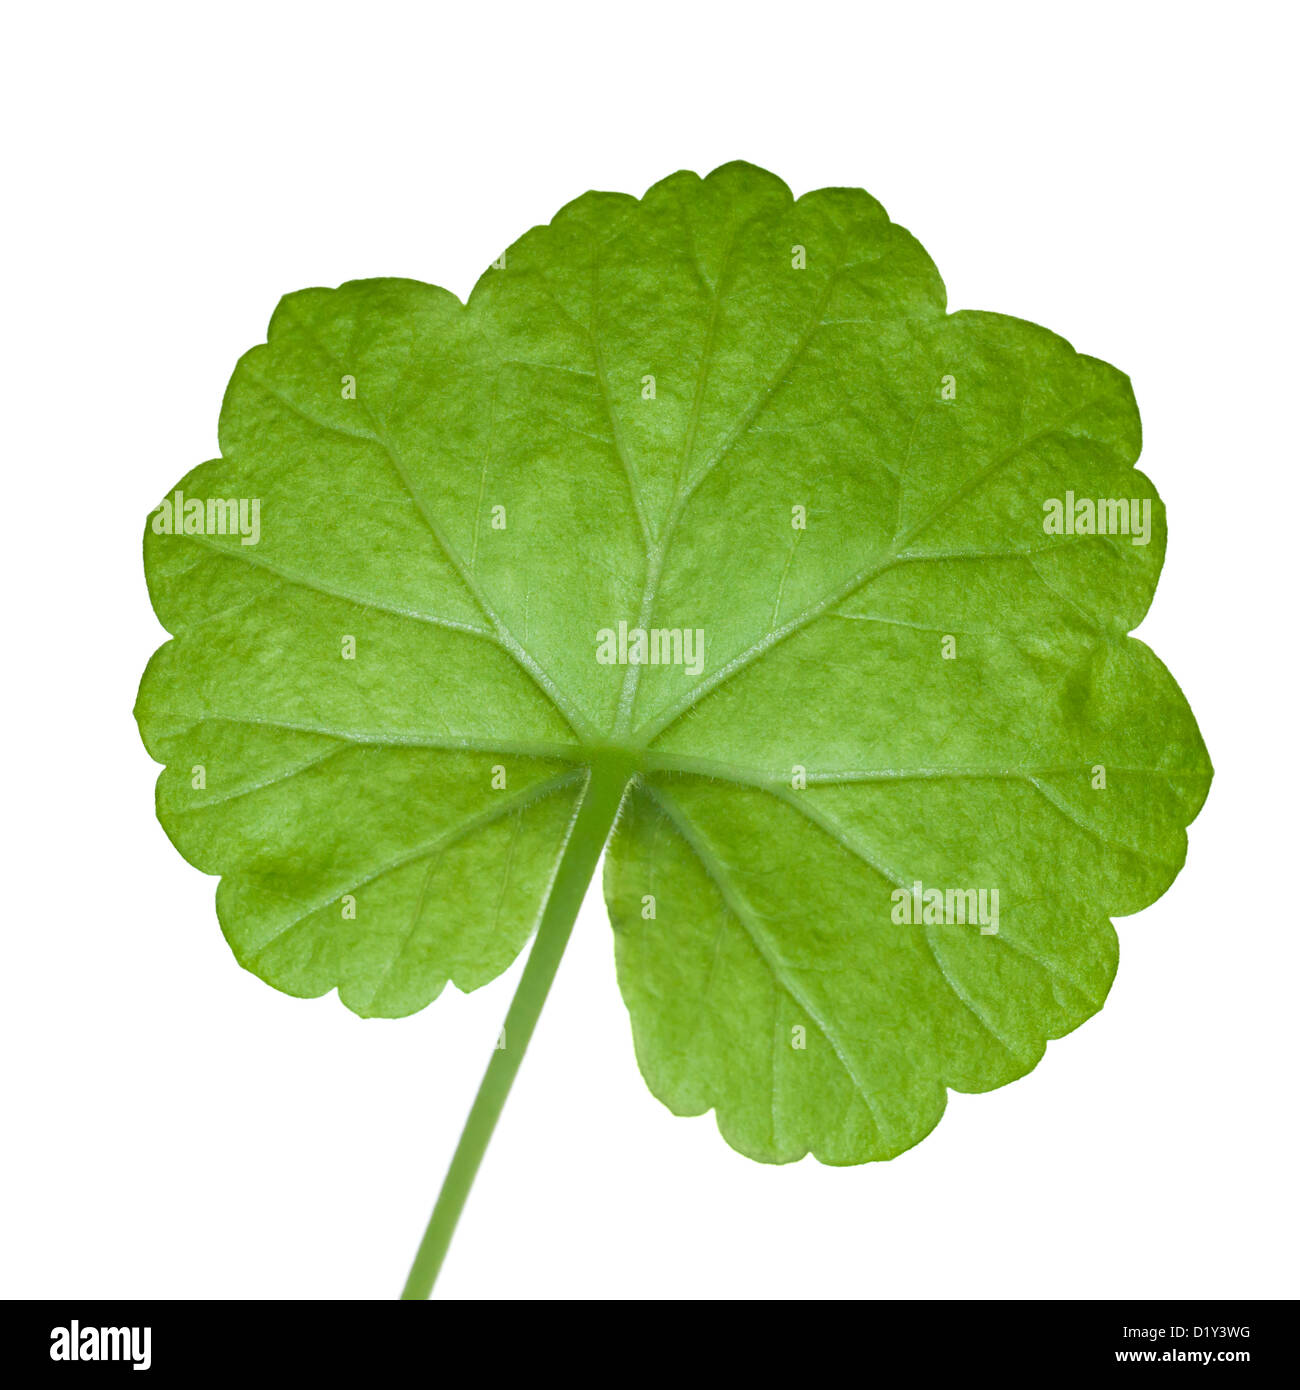 Geranium leaf immagini e fotografie stock ad alta risoluzione - Alamy